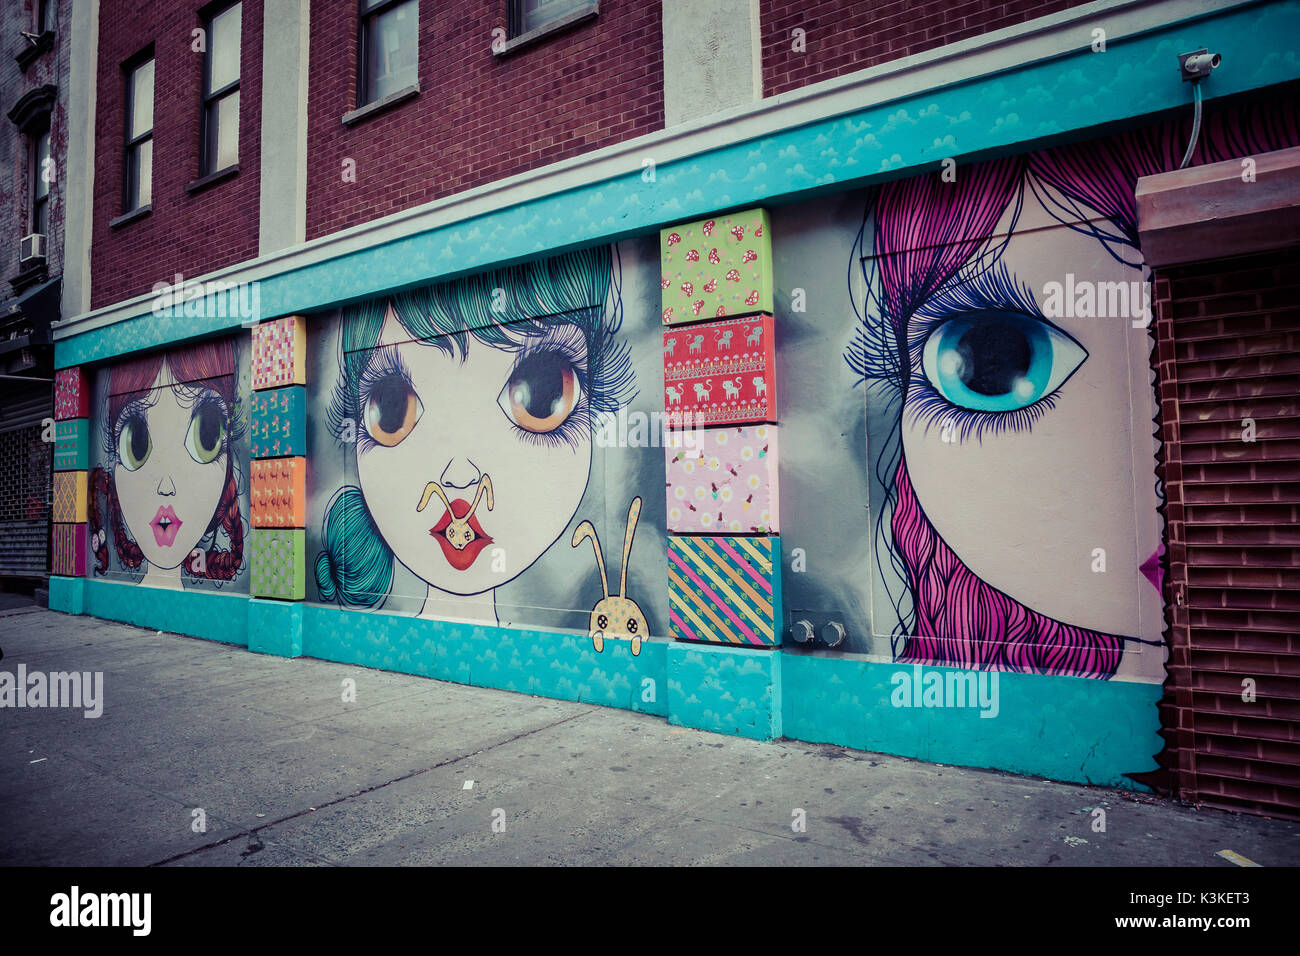 Graffiti and Street Art, big eyes girls, manga style, Manhatten, New York, USA Stock Photo